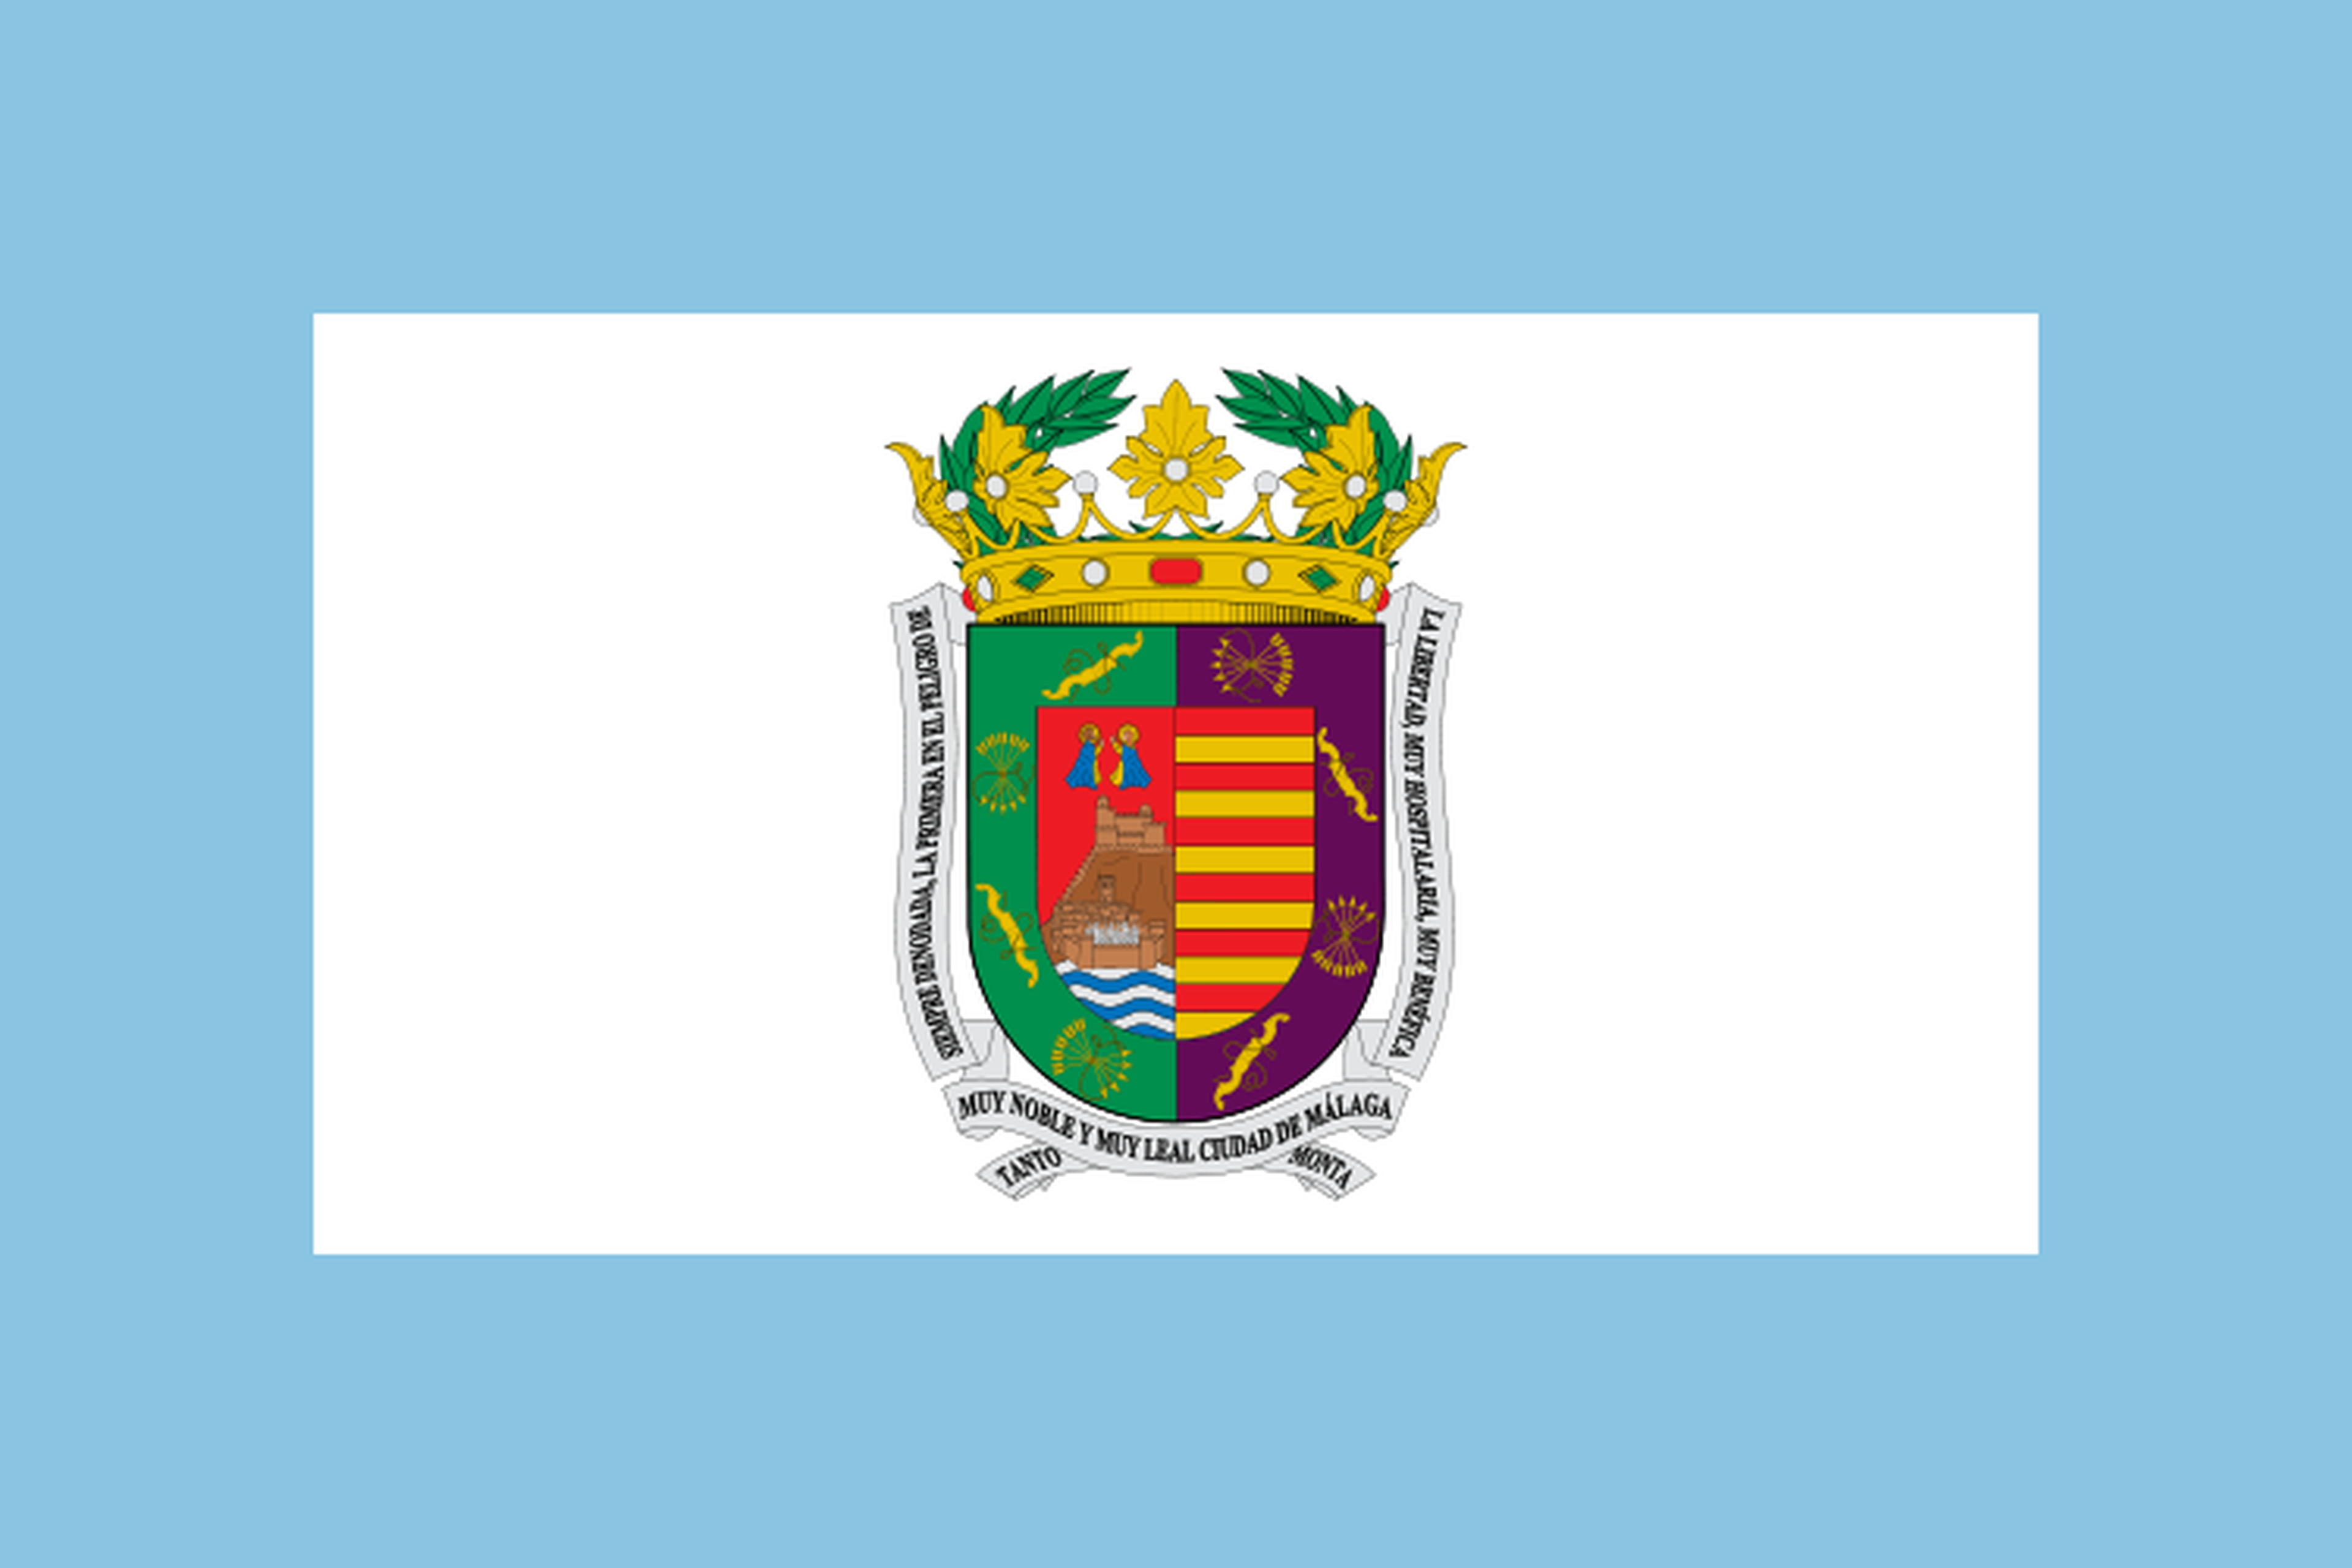 Radares Málaga 2020